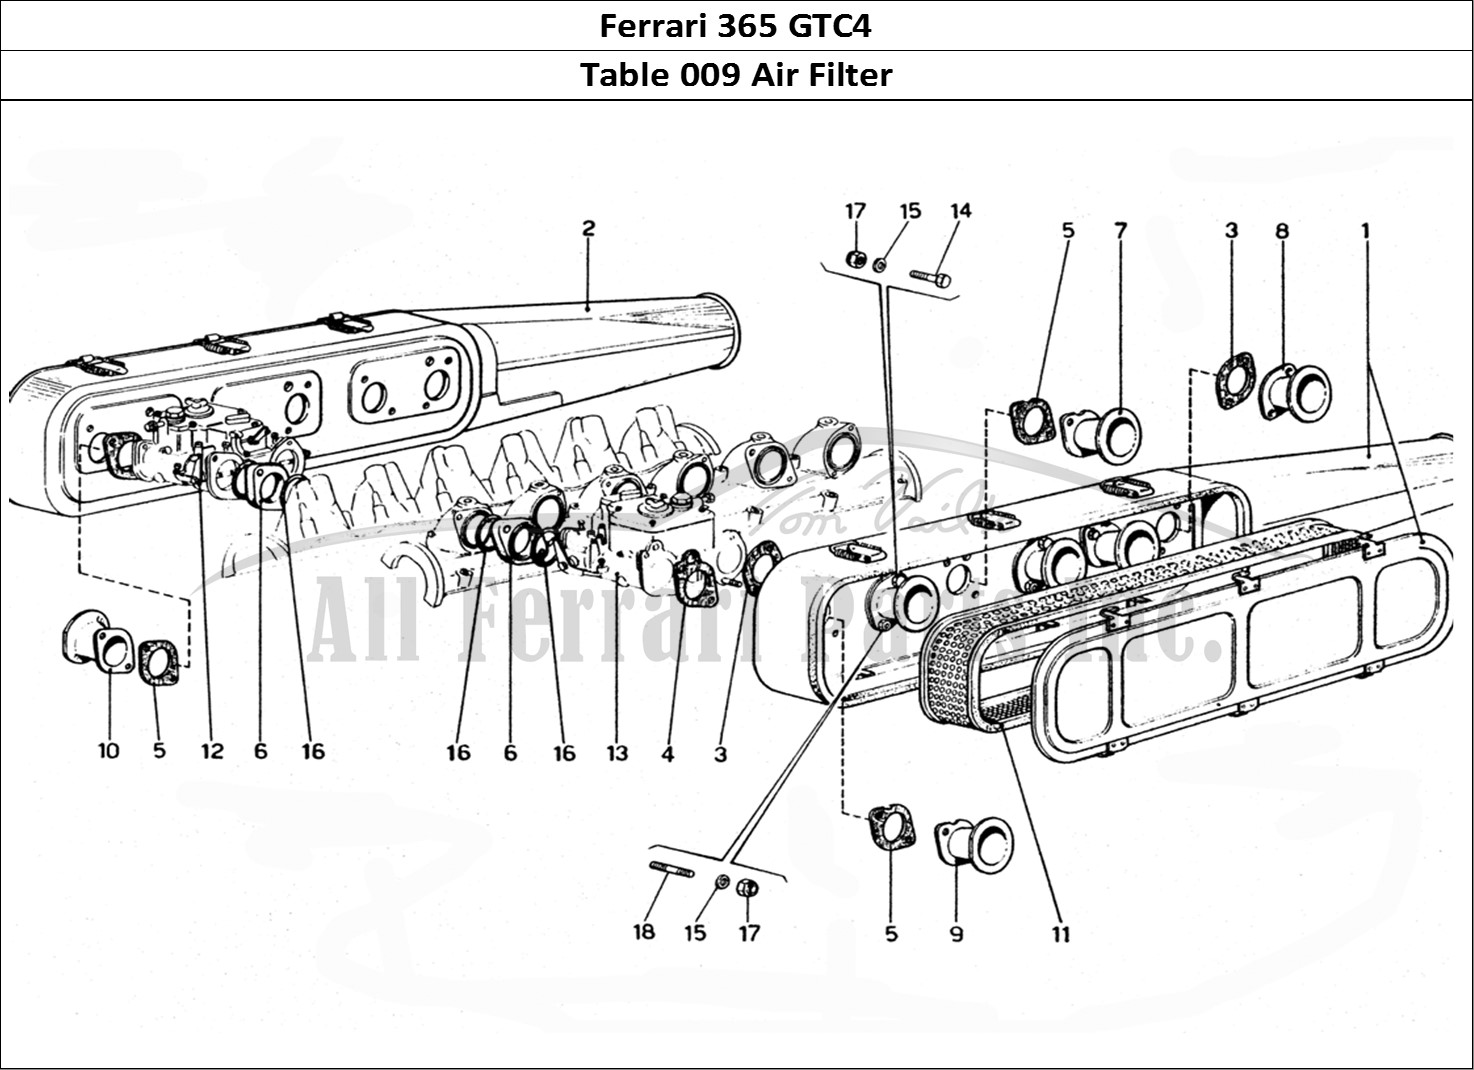 Ferrari Parts Ferrari 365 GTC4 (Mechanical) Page 009 Air filters